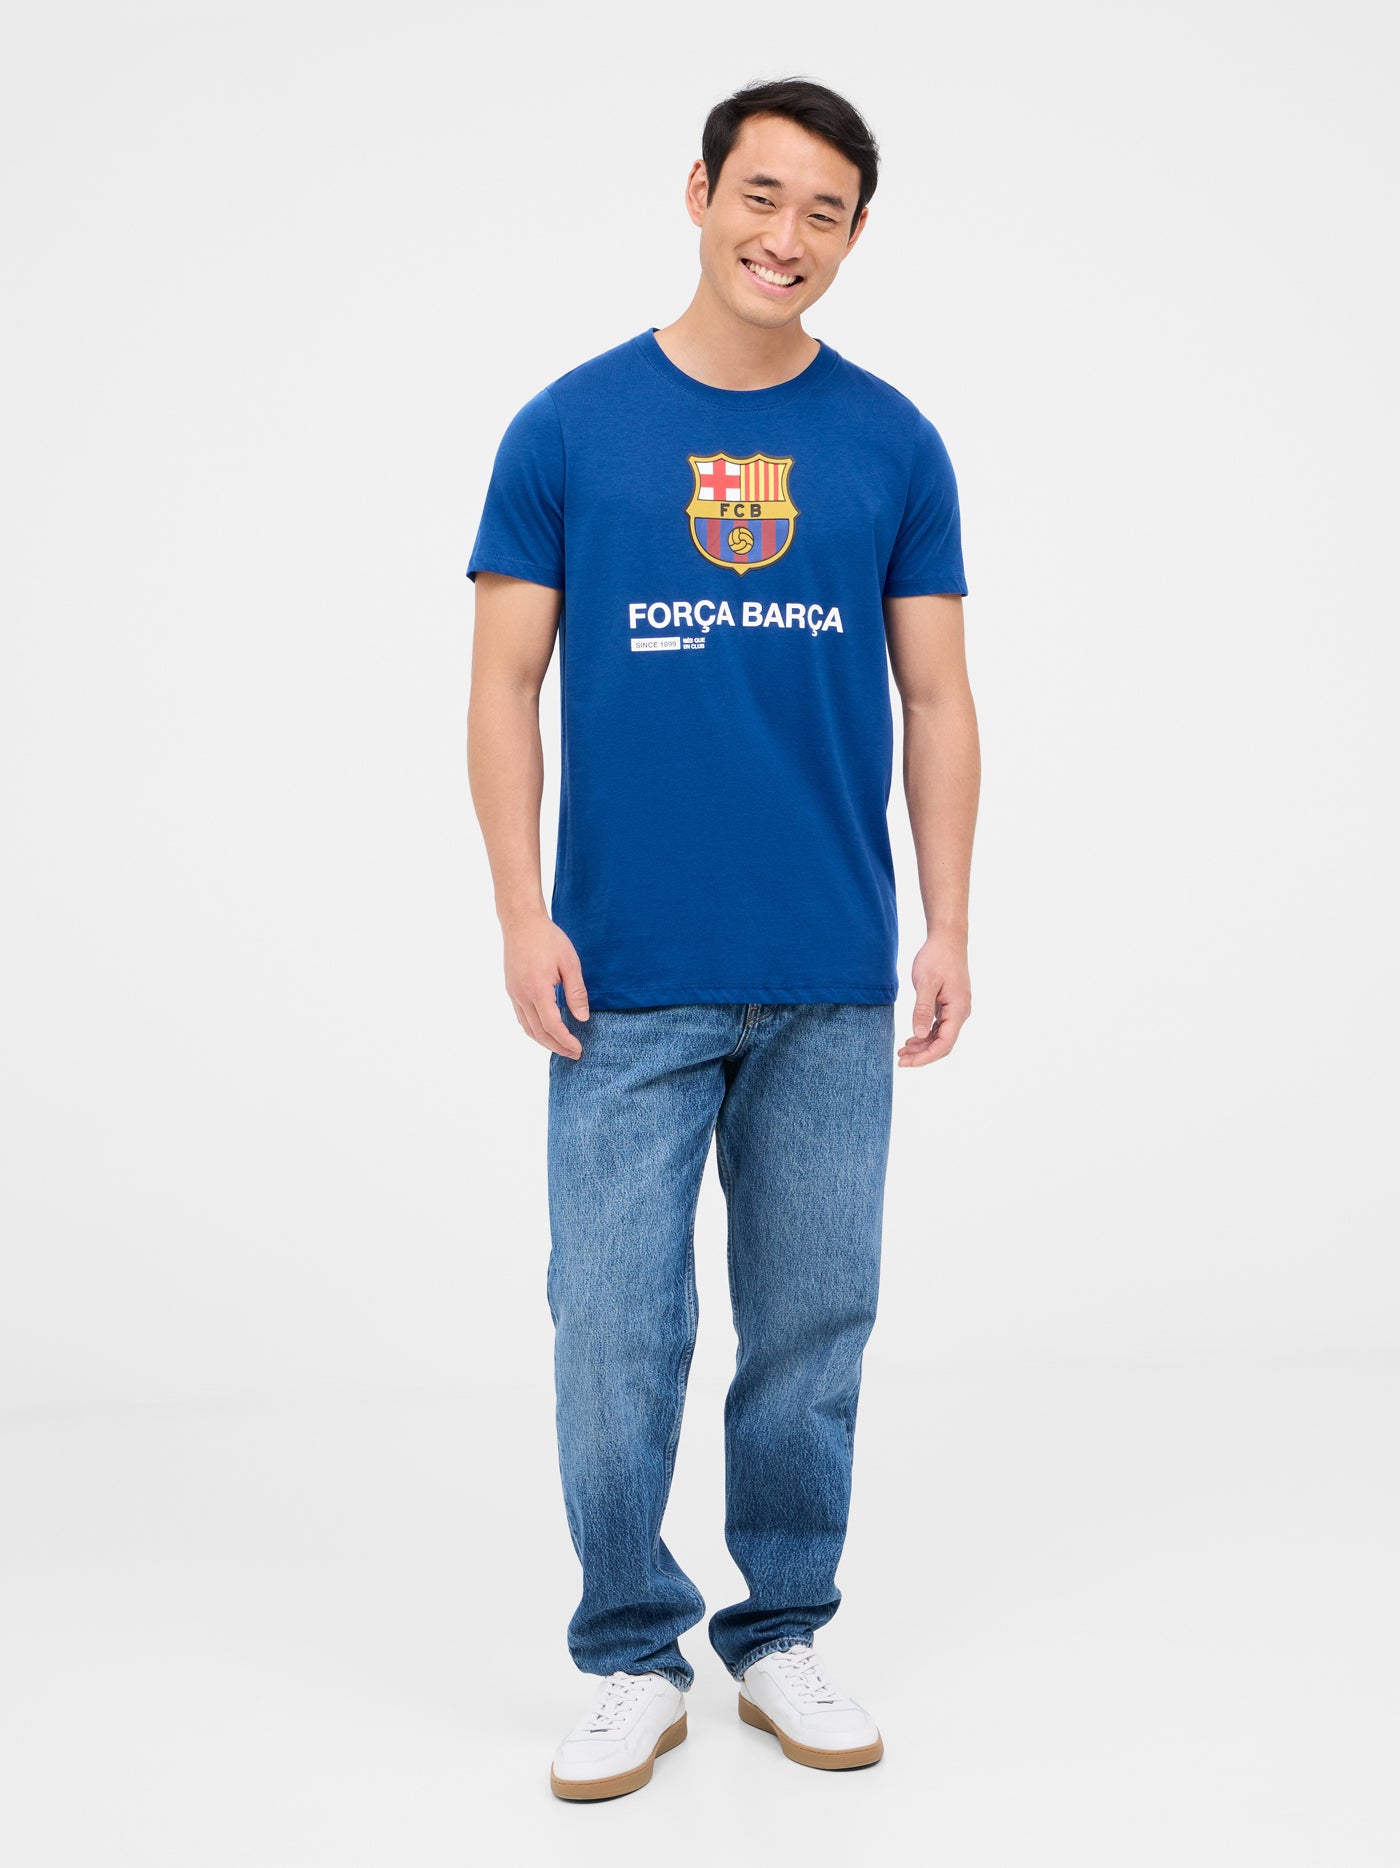 T-shirt blue Força Barça